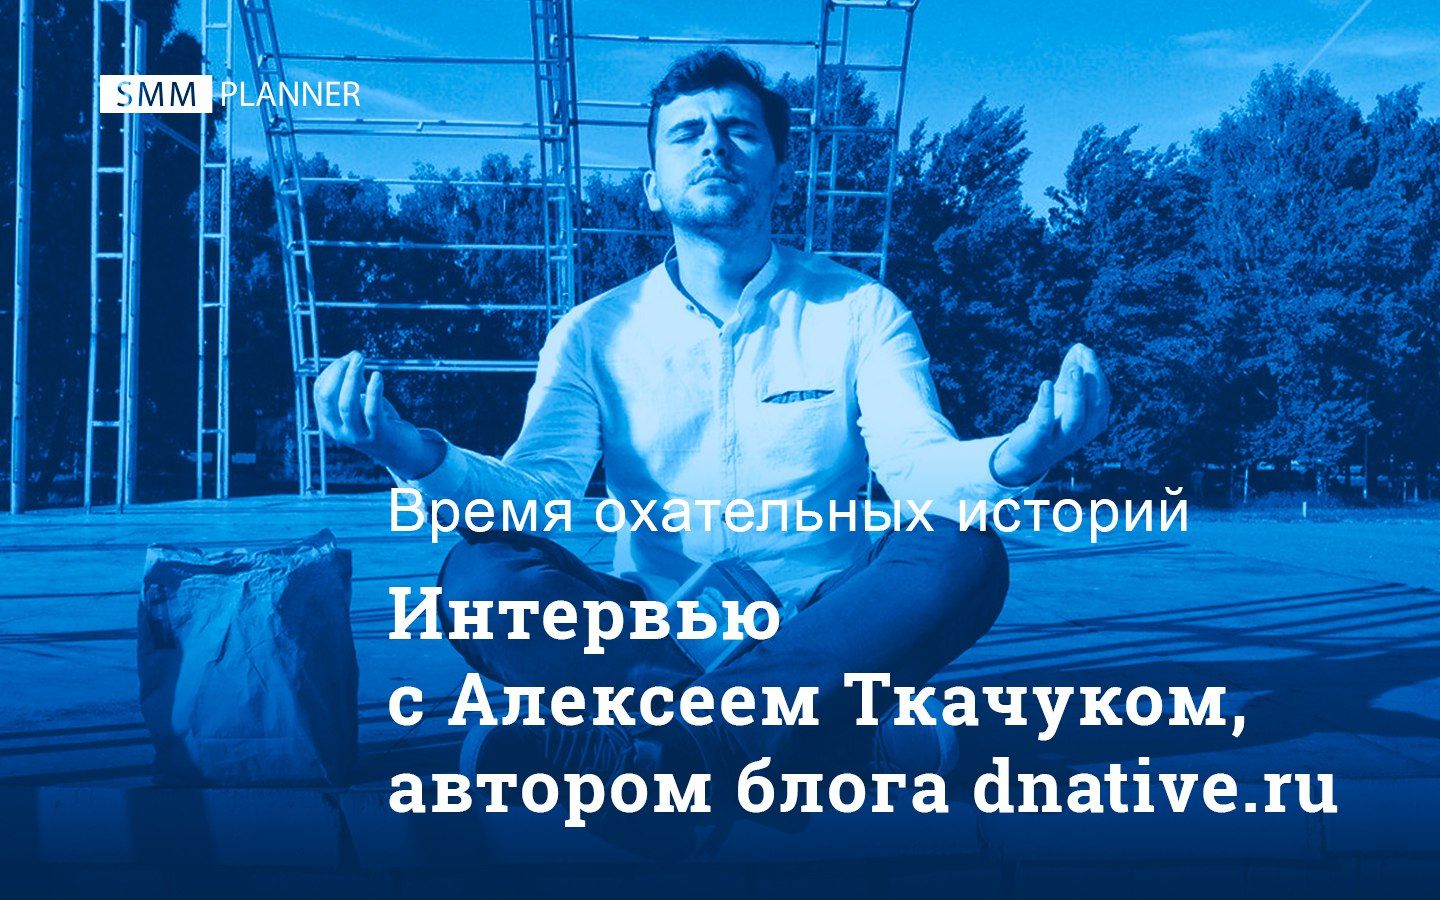 Интервью с Алексеем Ткачуком, автором блога dnative.ru